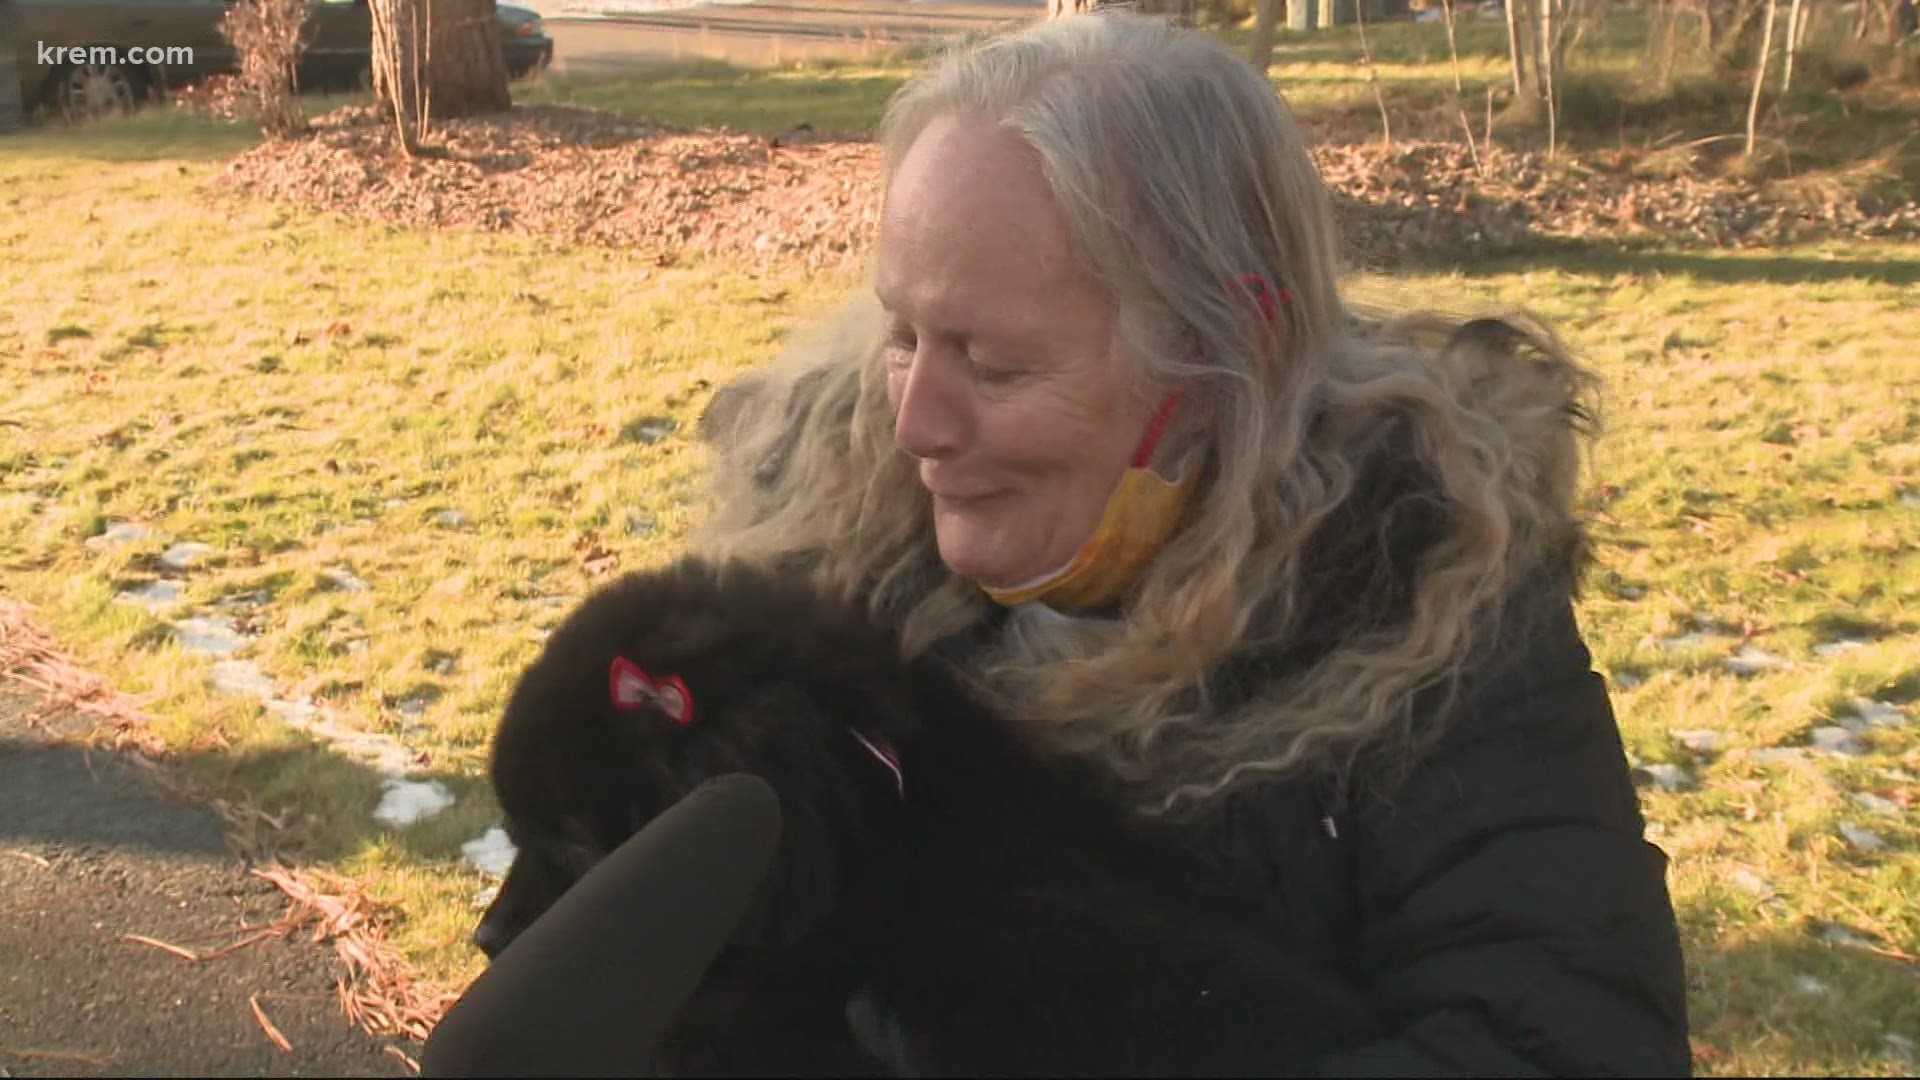 Nine Mile Falls Newfoundland breeder Becky Deakins gifted Jeanne Dixon a puppy after her story aired on KREM 2 News.